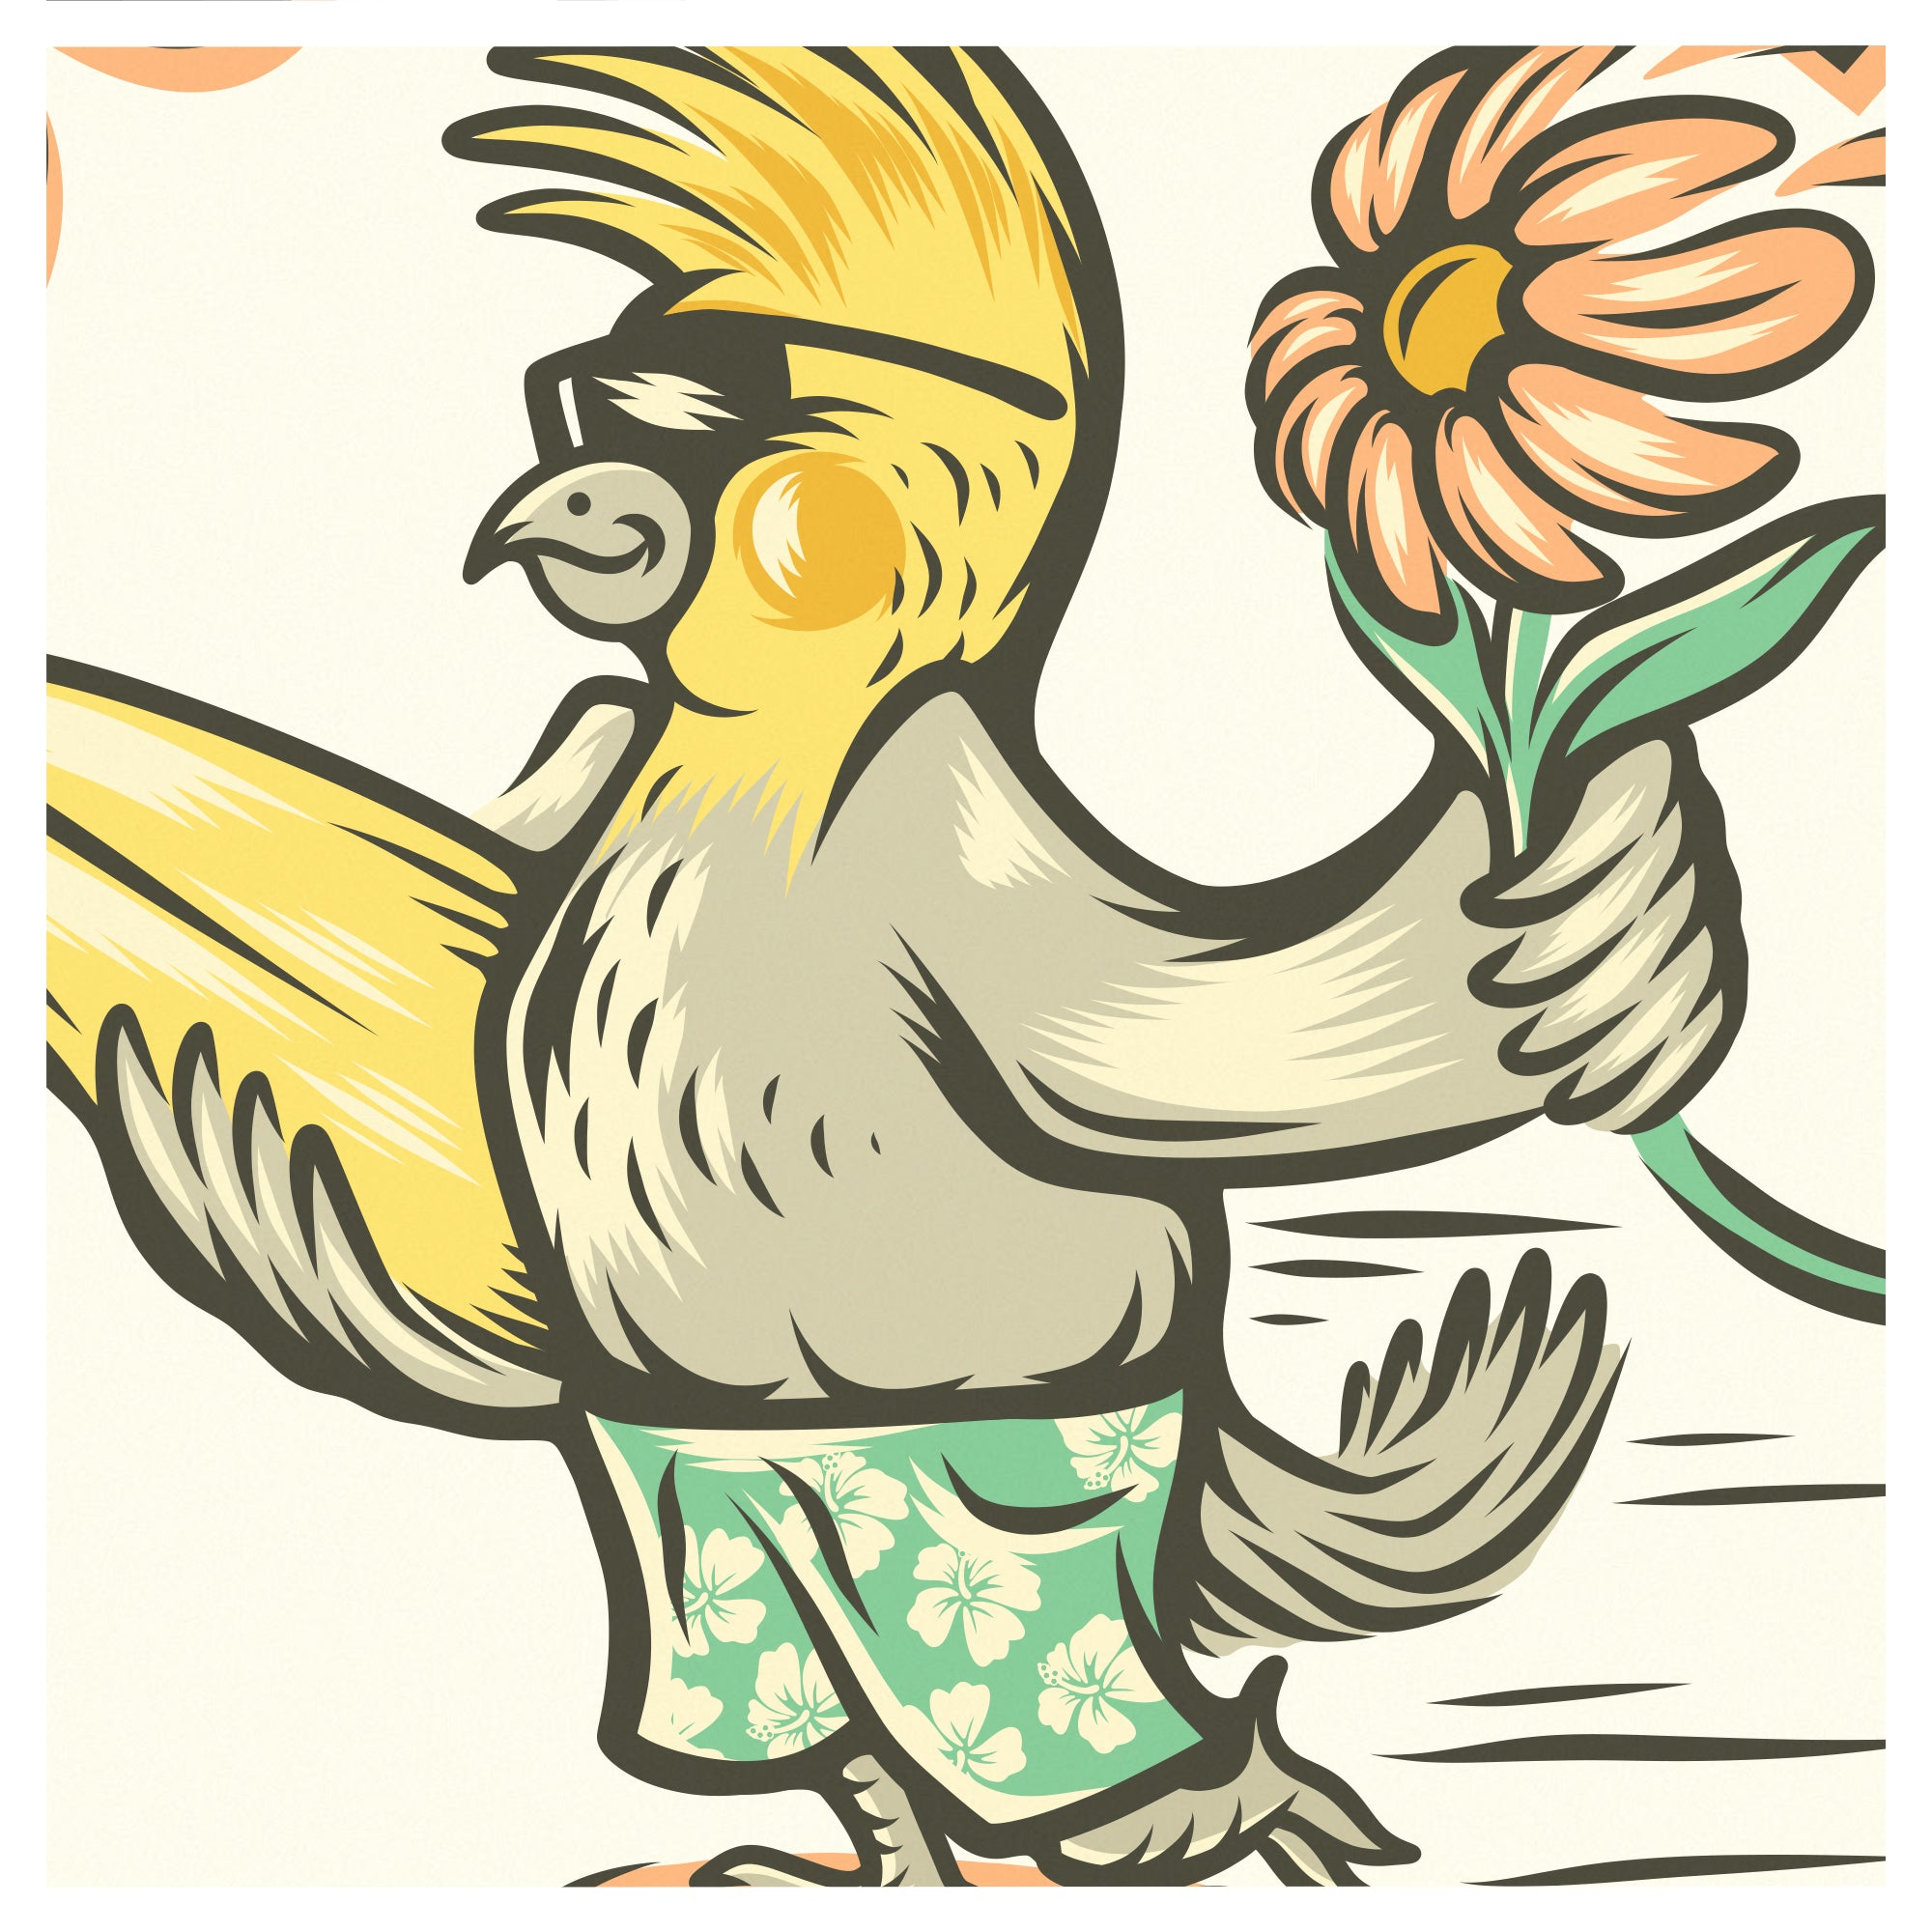 An illustration of a bird holding a surfboard and a flower by Hawaii artist Laihha Organna